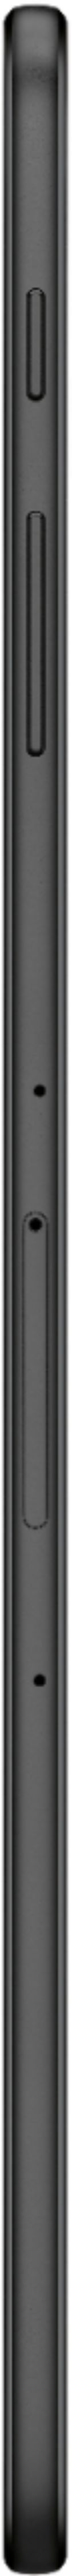  Samsung Galaxy Tab S3 9.7 32GB - Black (Verizon Wireless)  SM-T827VZKAVZW : Electronics